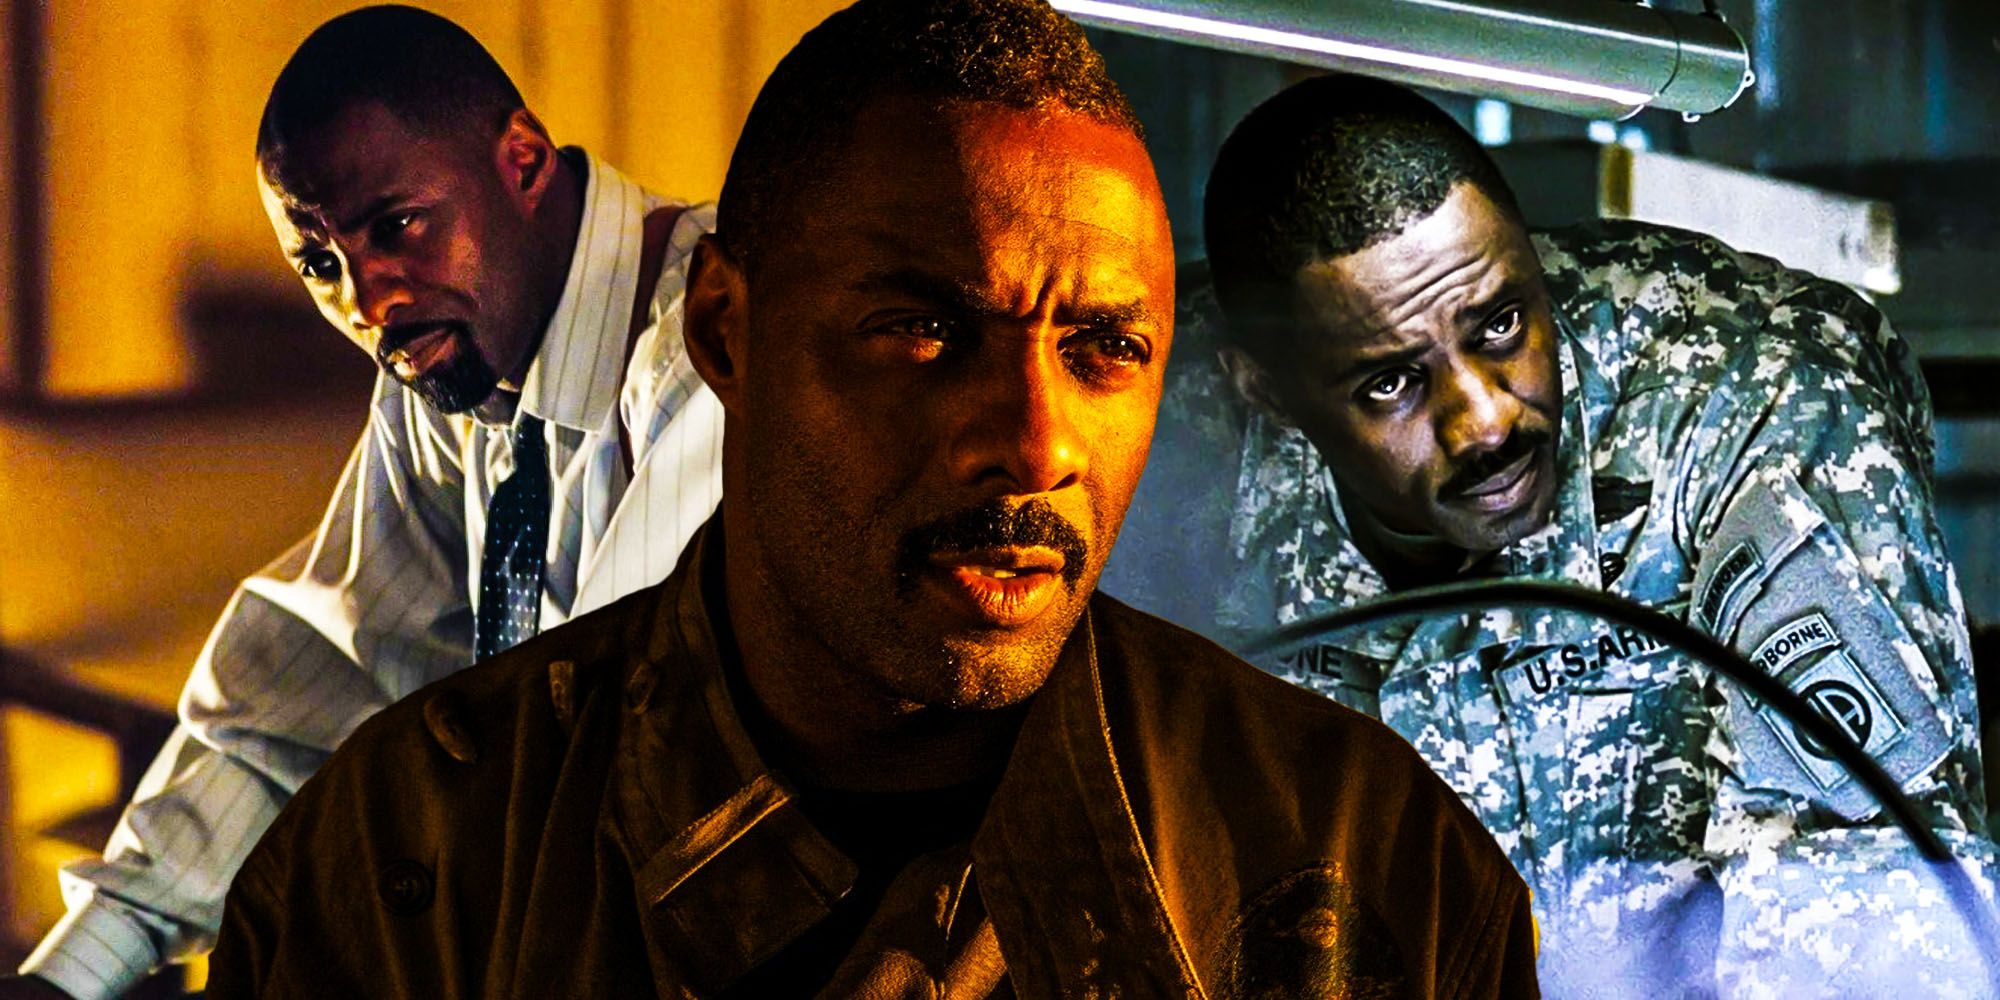 Idris Elba Horror Movies prometheus 28 weeks later Prom night